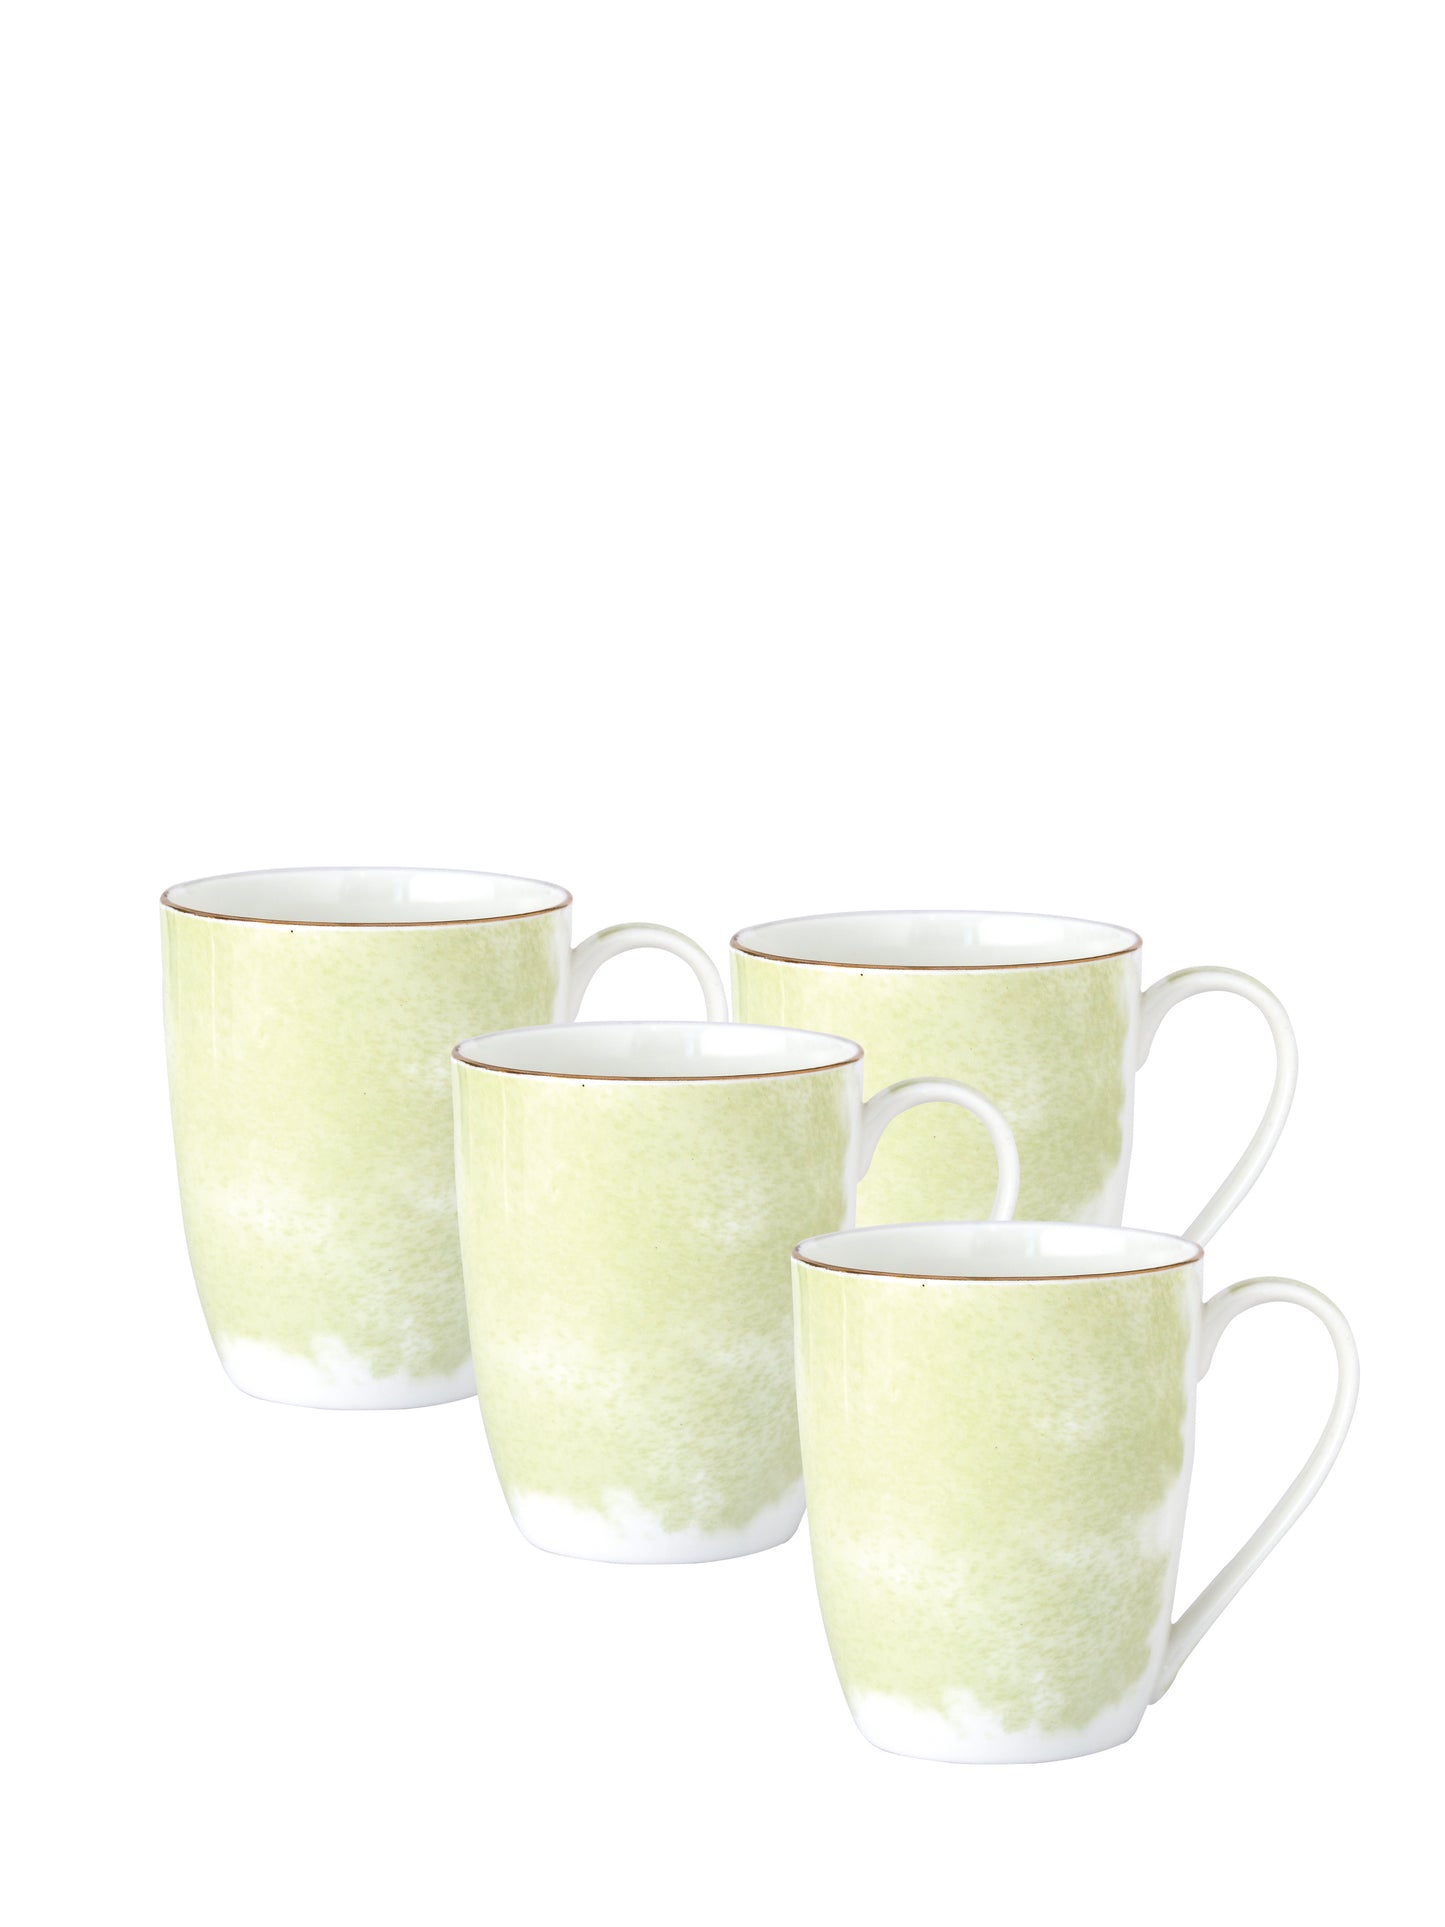 Oxford Paradise Coffee & Milk Mug, 320ml, Set of 4, P504